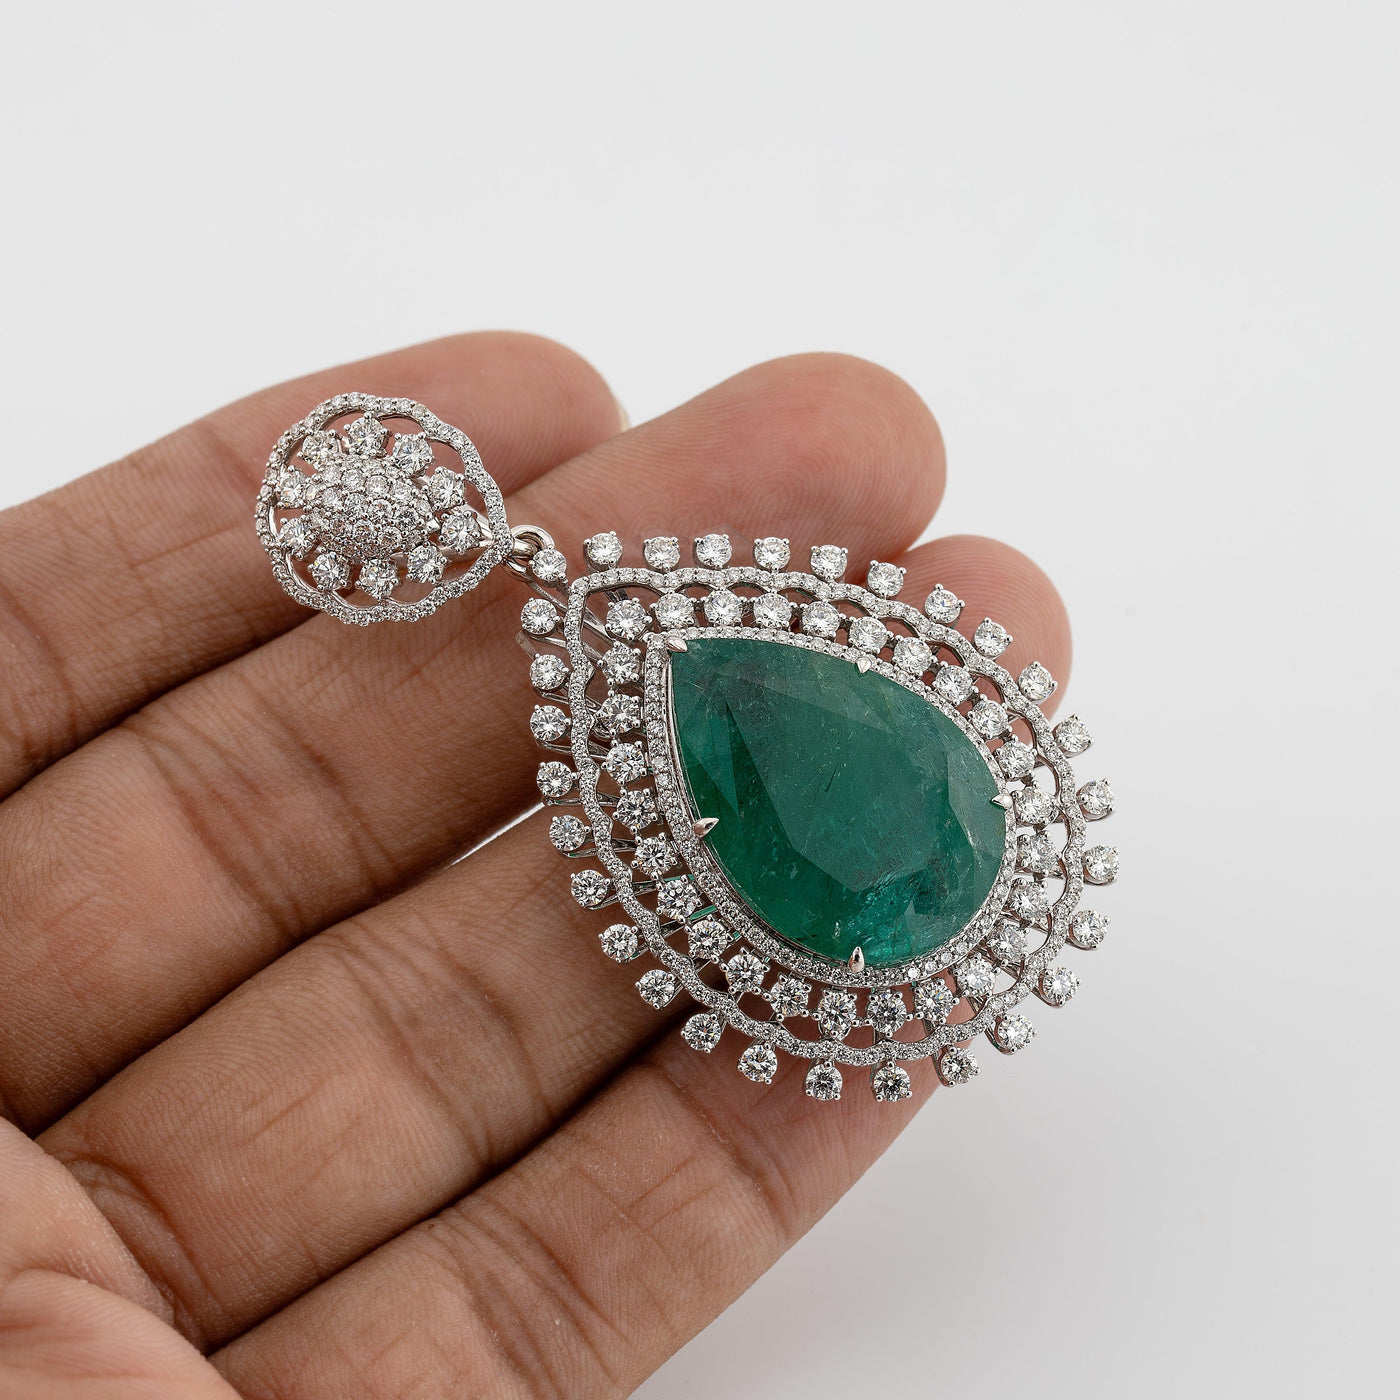 Green emerald color pear shaped pendant with white diamond halo setting - Rubysta